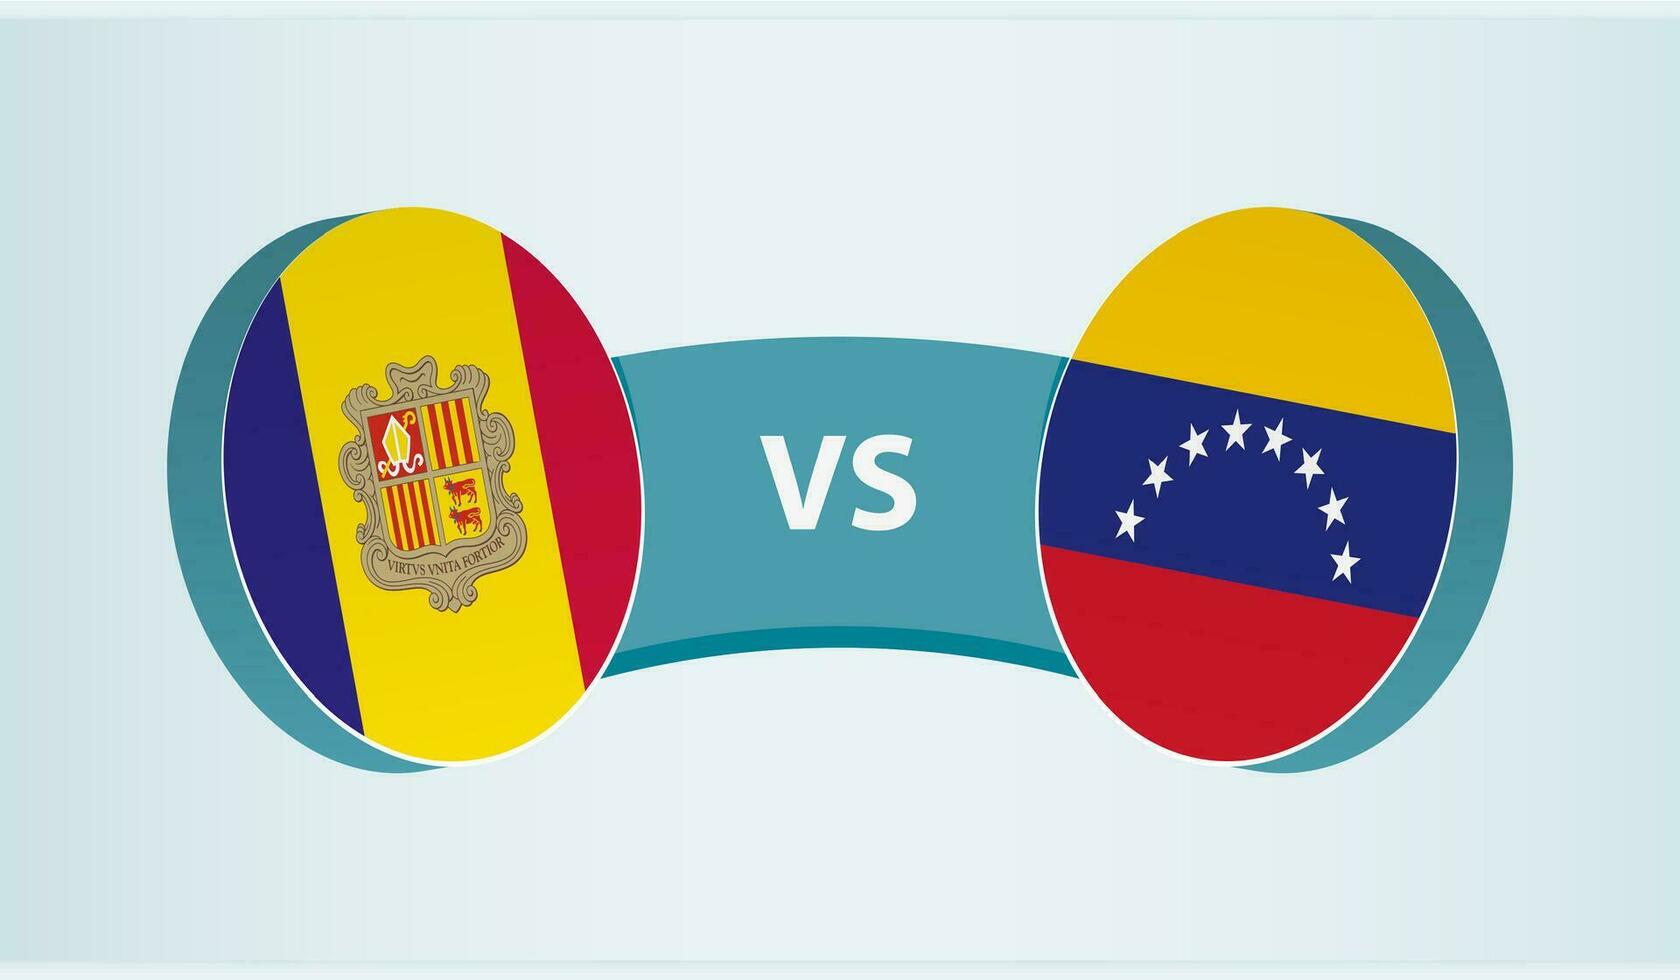 Andorra versus Venezuela, team sports competition concept. vector